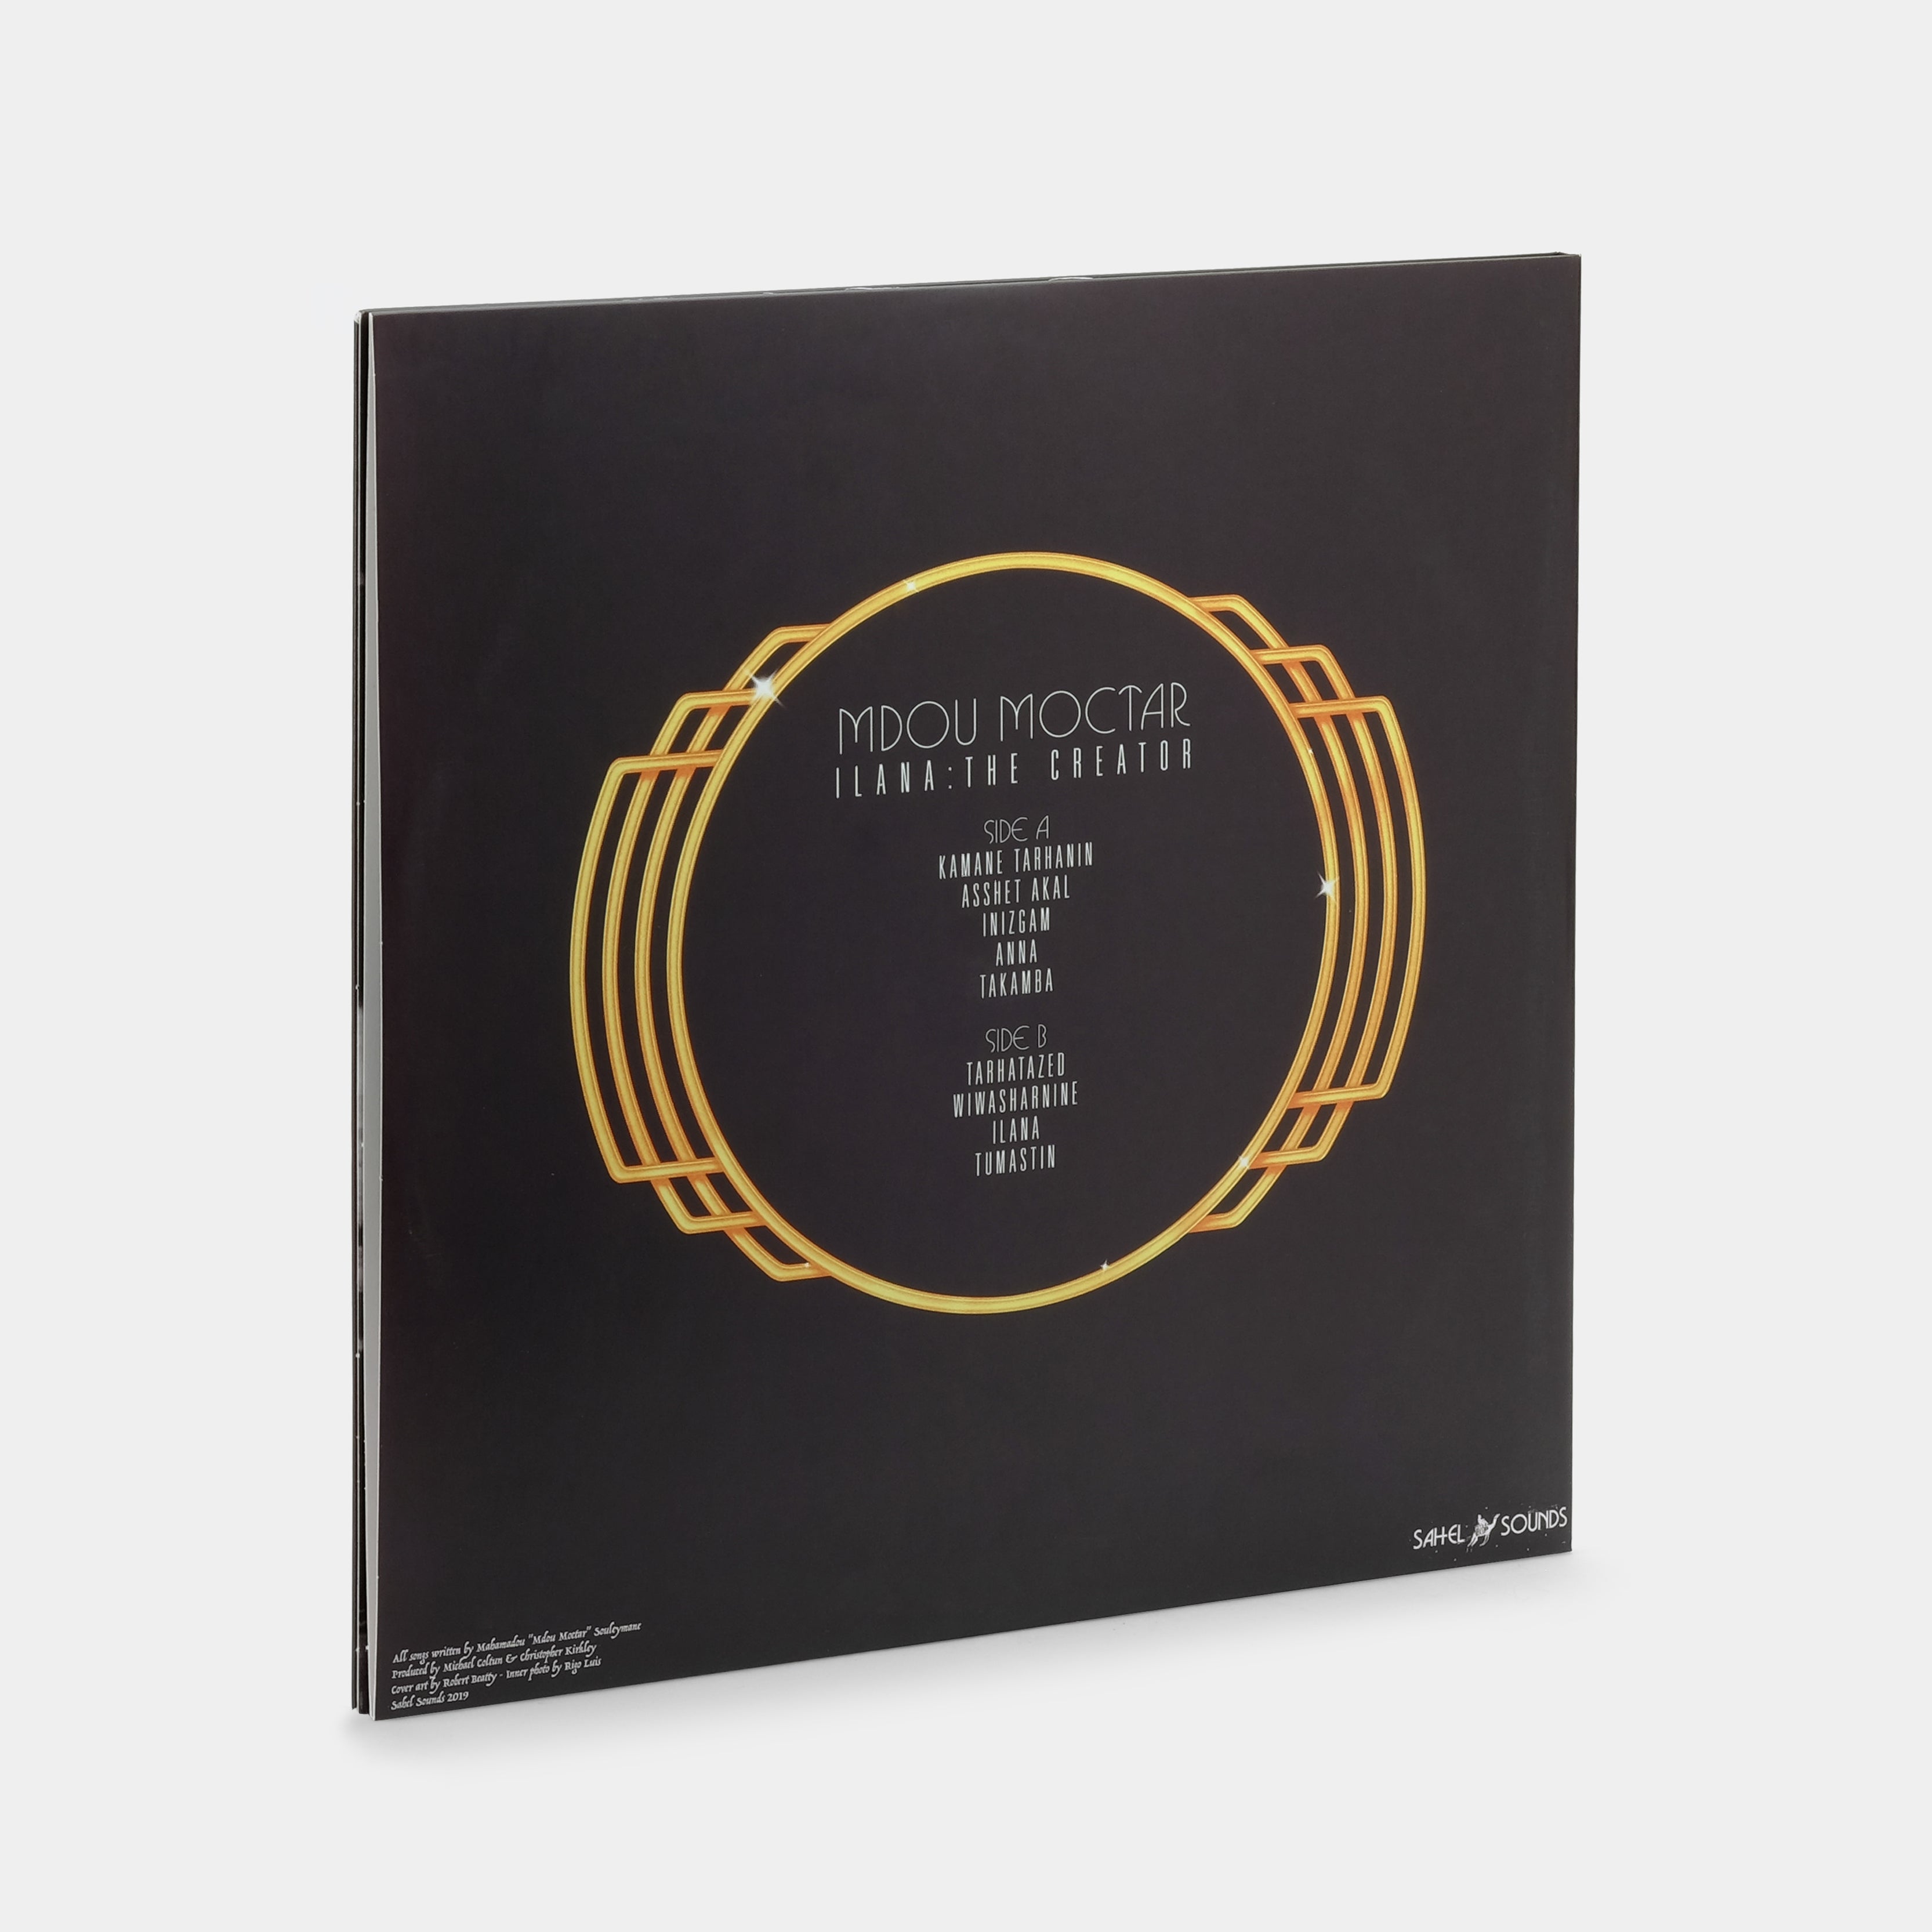 Mdou Moctar - Ilana: The Creator LP Vinyl Record